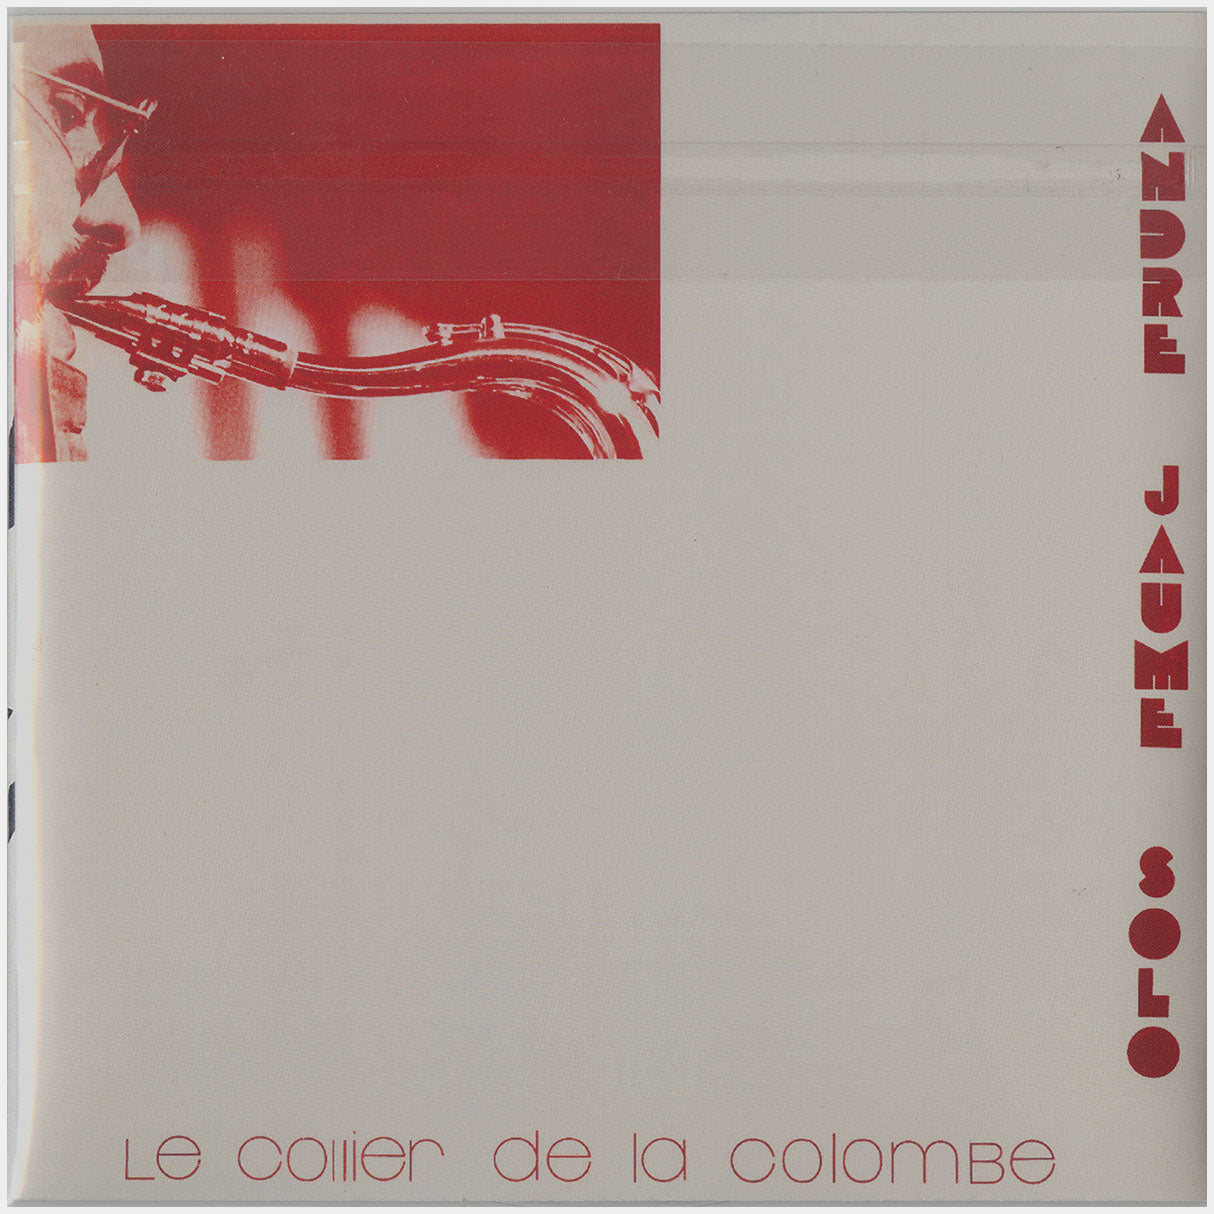 [CP 199.05 CD] André Jaume, Michel Redolfi; Hardscore, Le Collier De La Colombe